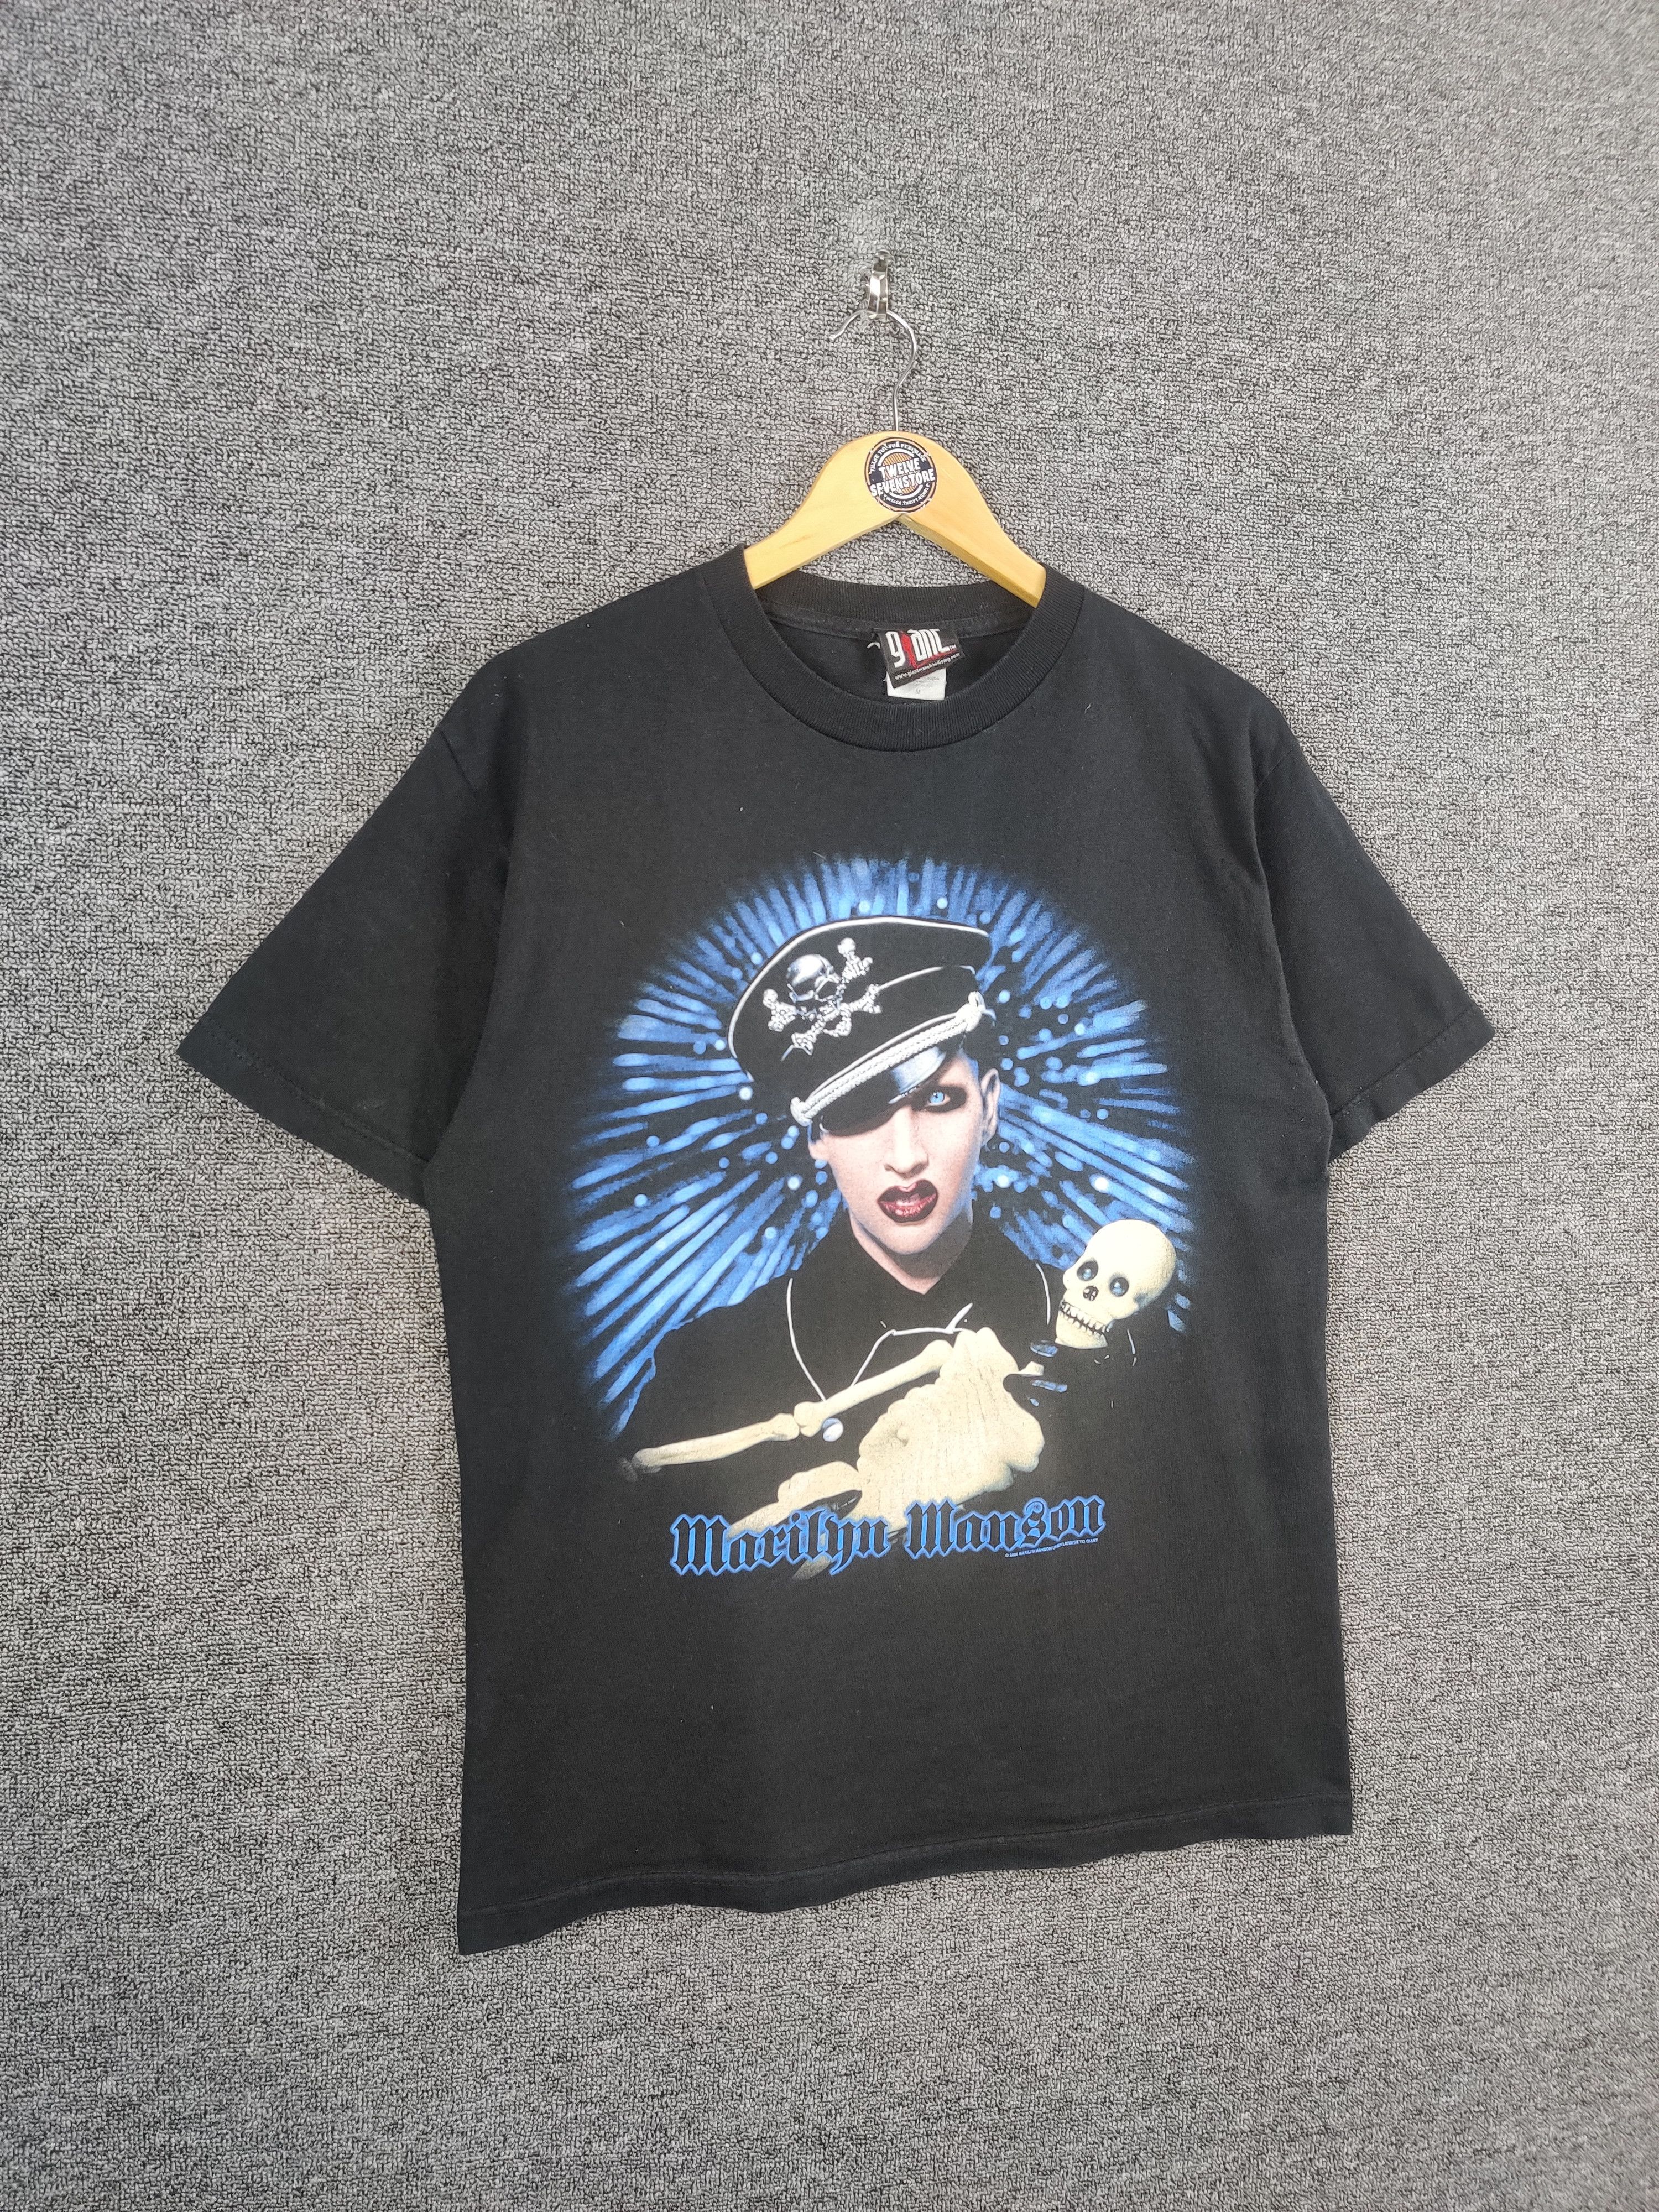 Vintage 2000 Vintage Marilyn Manson Band Tee Tshirt Size US M / EU 48-50 / 2 - 6 Thumbnail